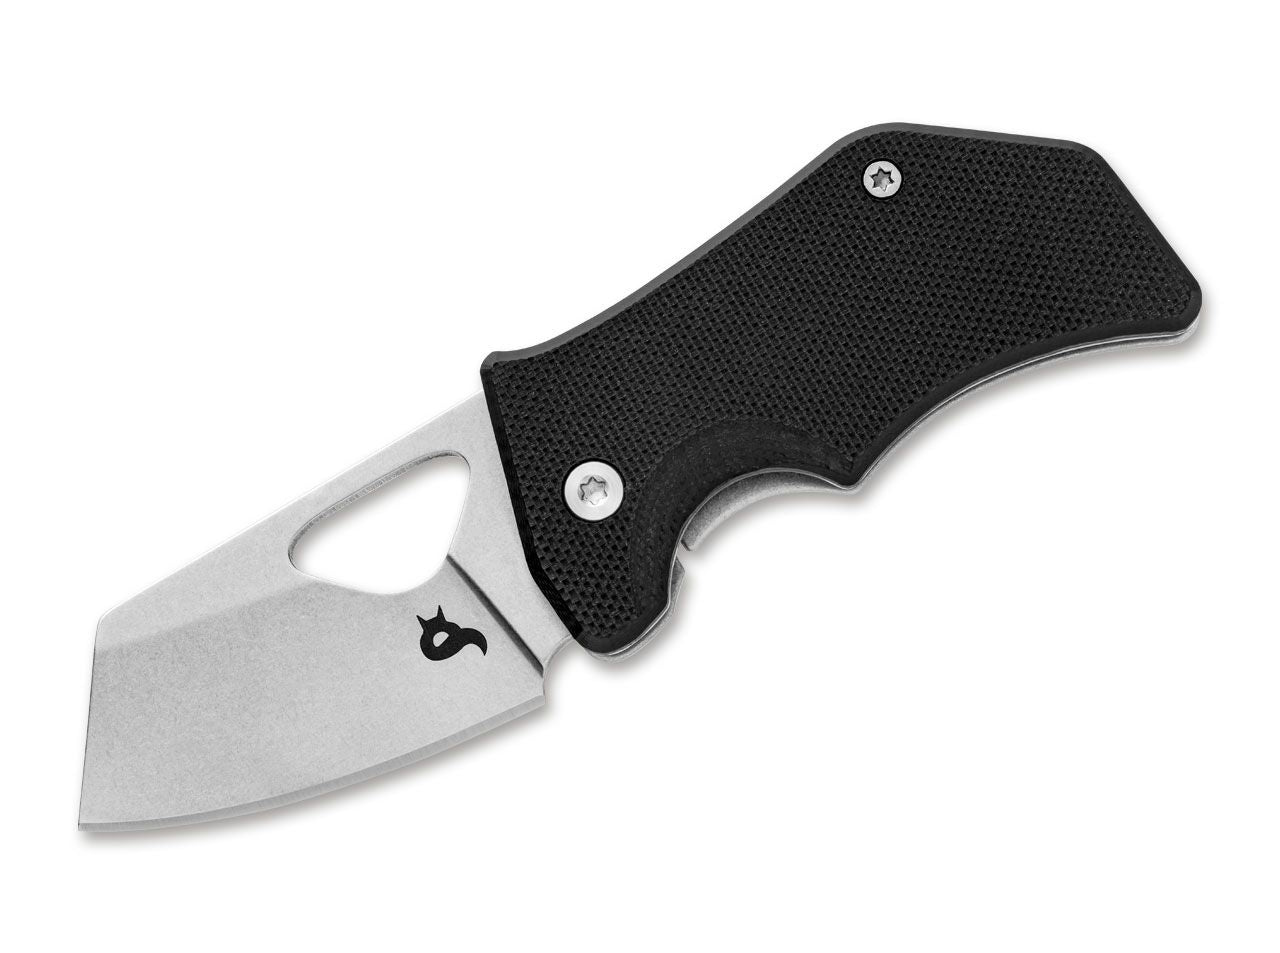 Fox BlackFox Kit 1.97" 440C Stonewashed Black G10 Mini Sheepsfoot Folding Knife